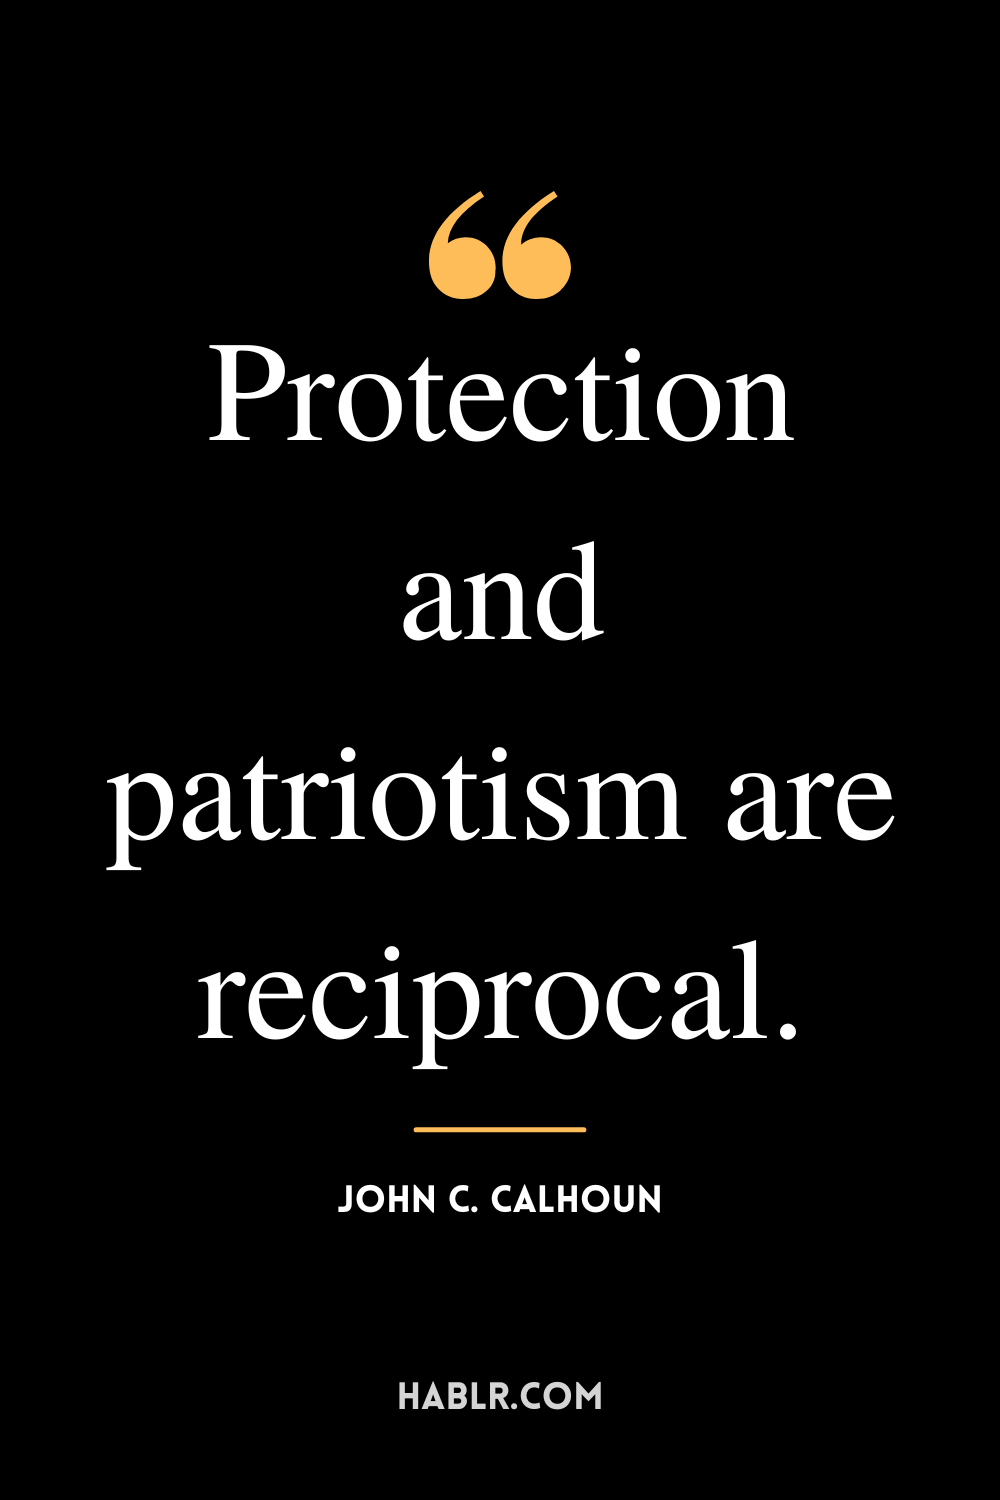 “Protection and patriotism are reciprocal.” -John C. Calhoun